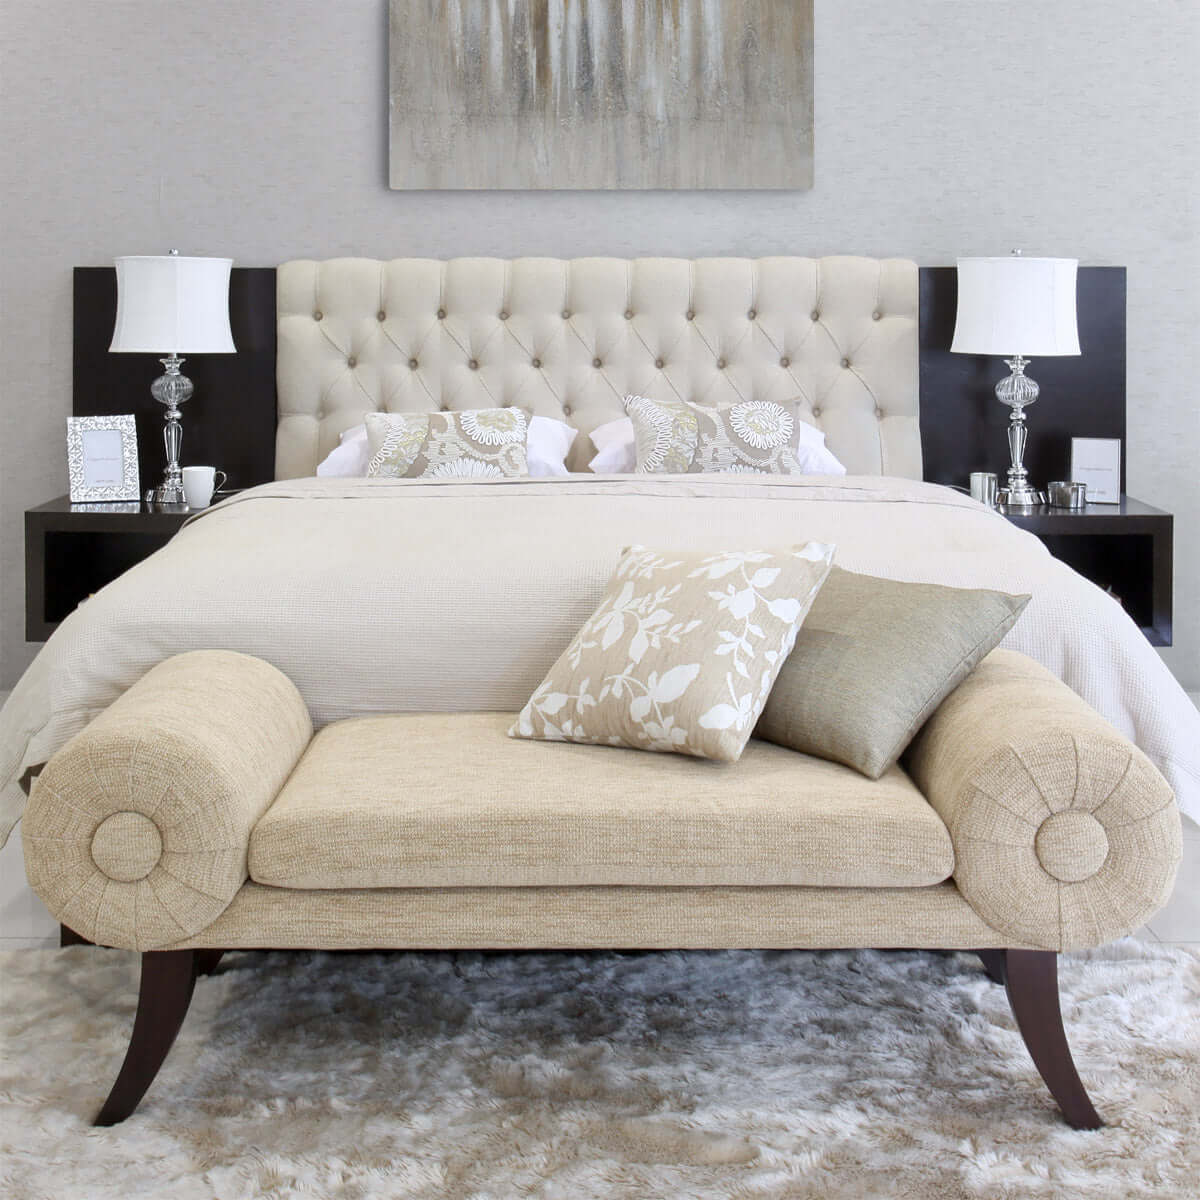 a classic yet stylish Hampton bed